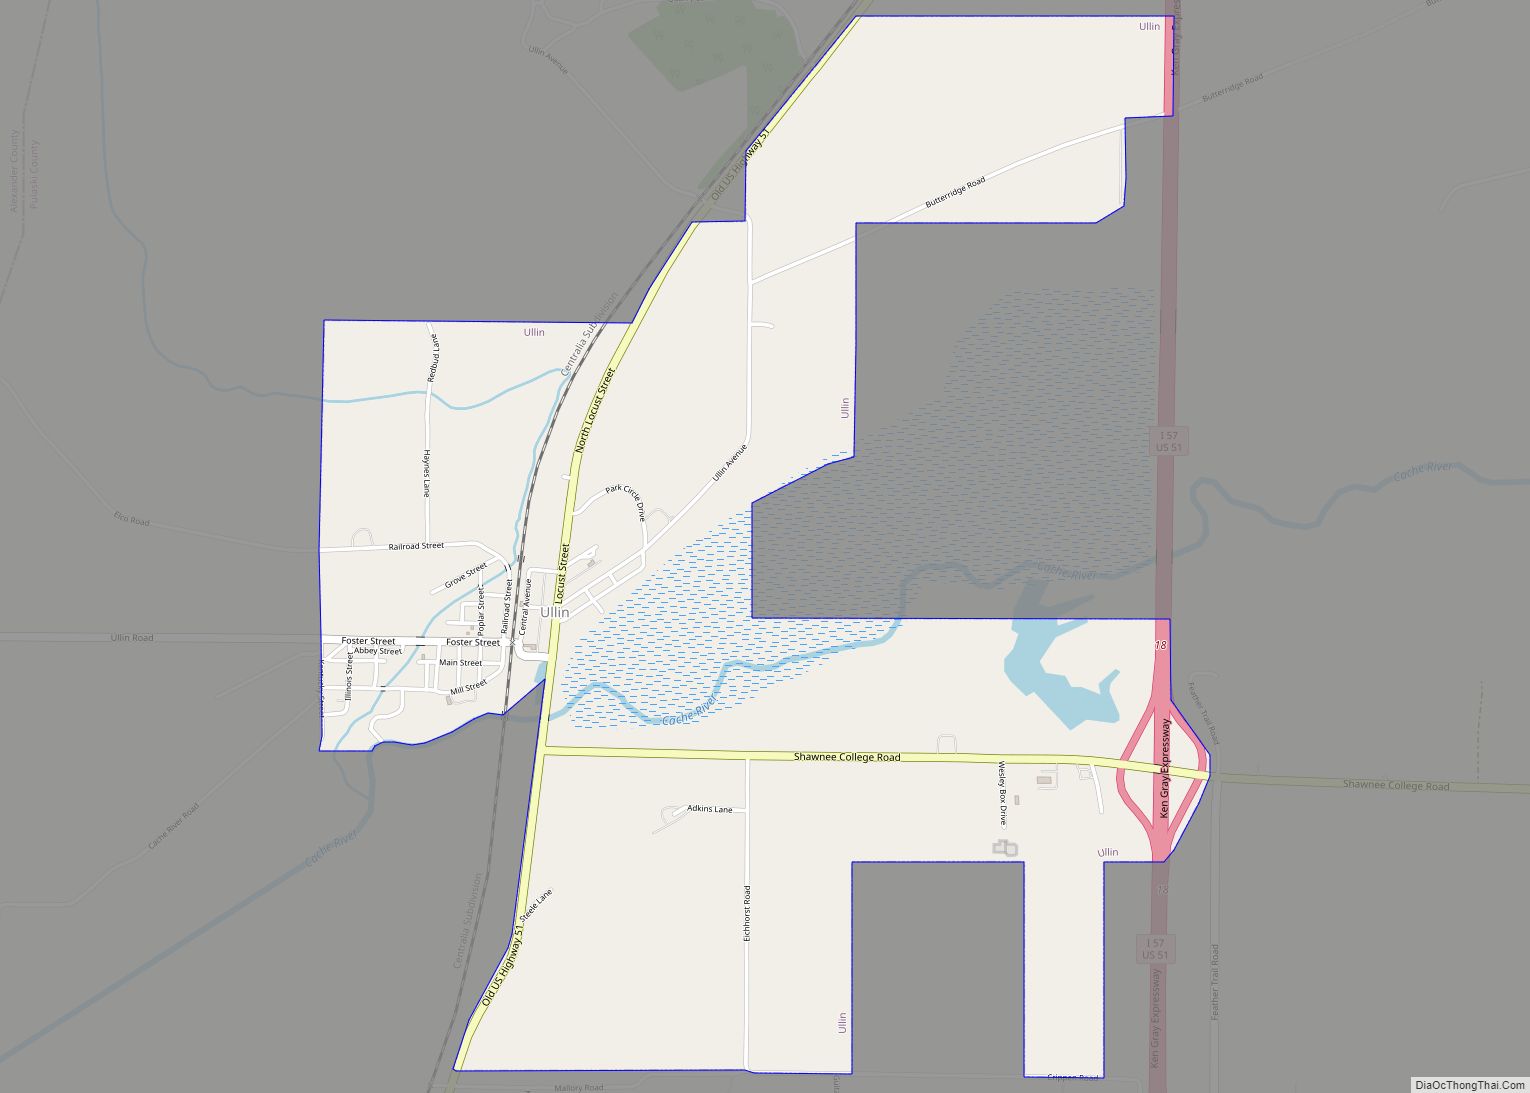 Map of Ullin village